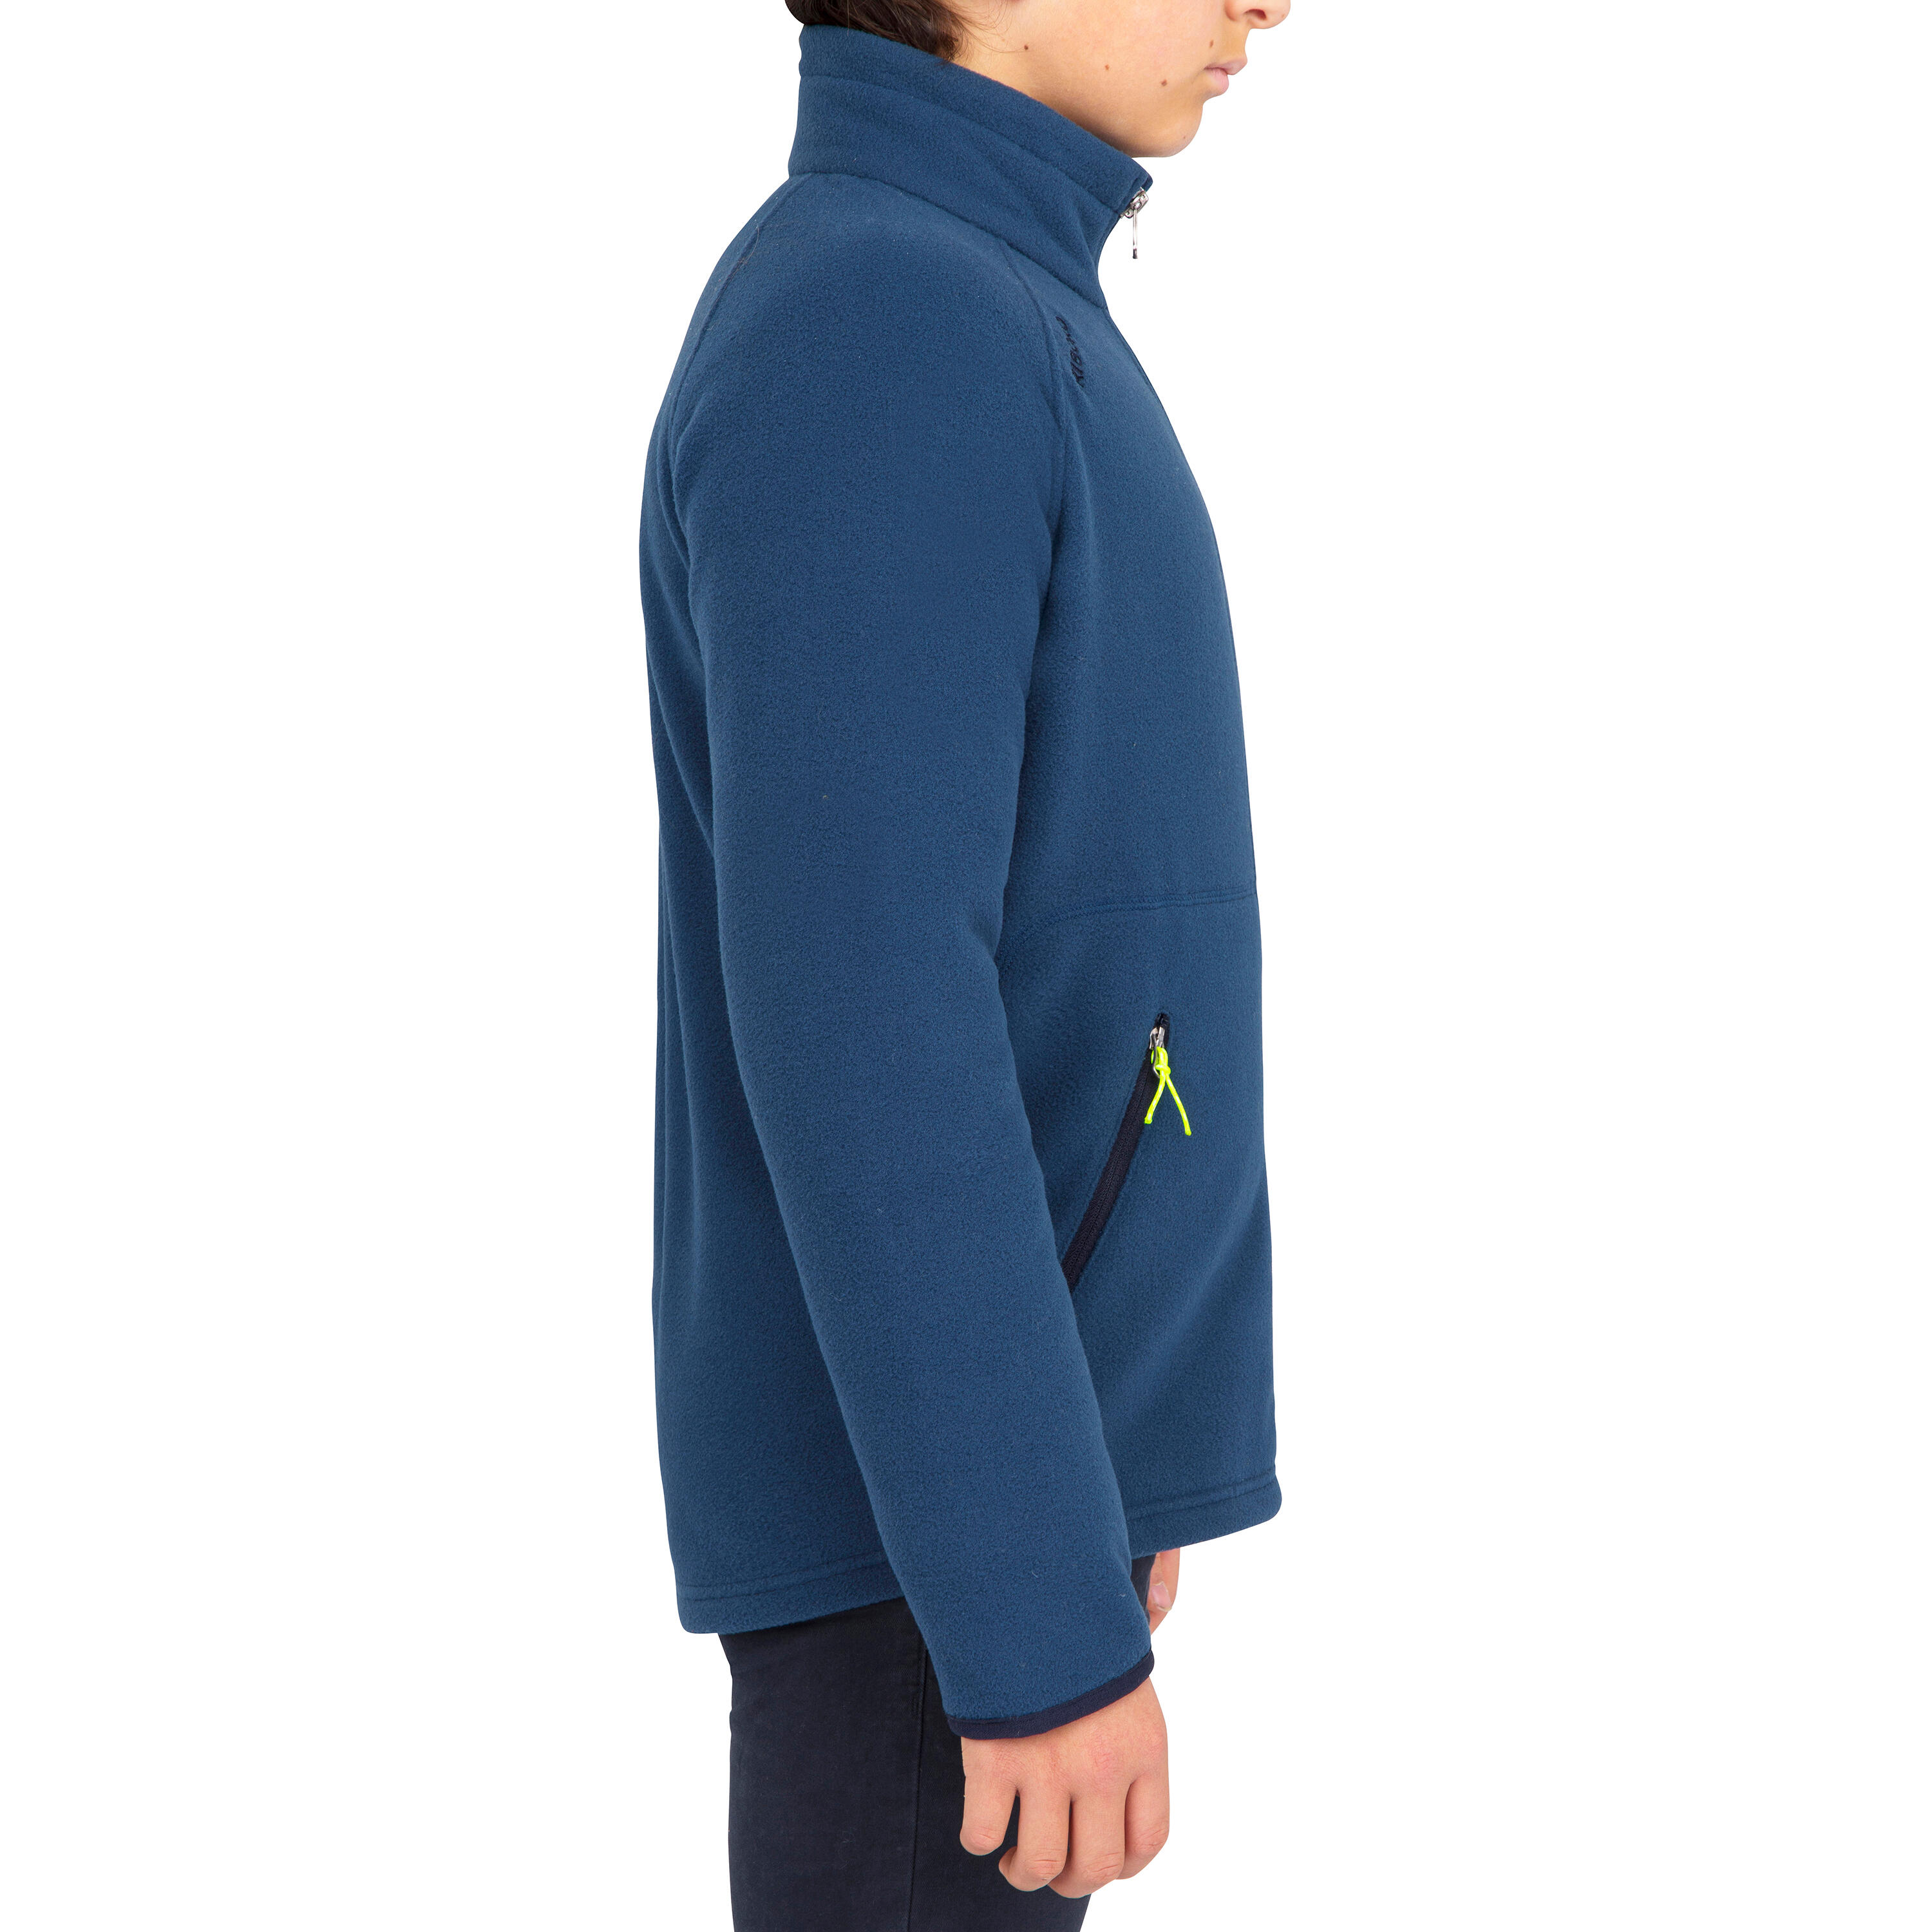 Kids warm fleece sailing jacket 100 - Ocean blue 3/10